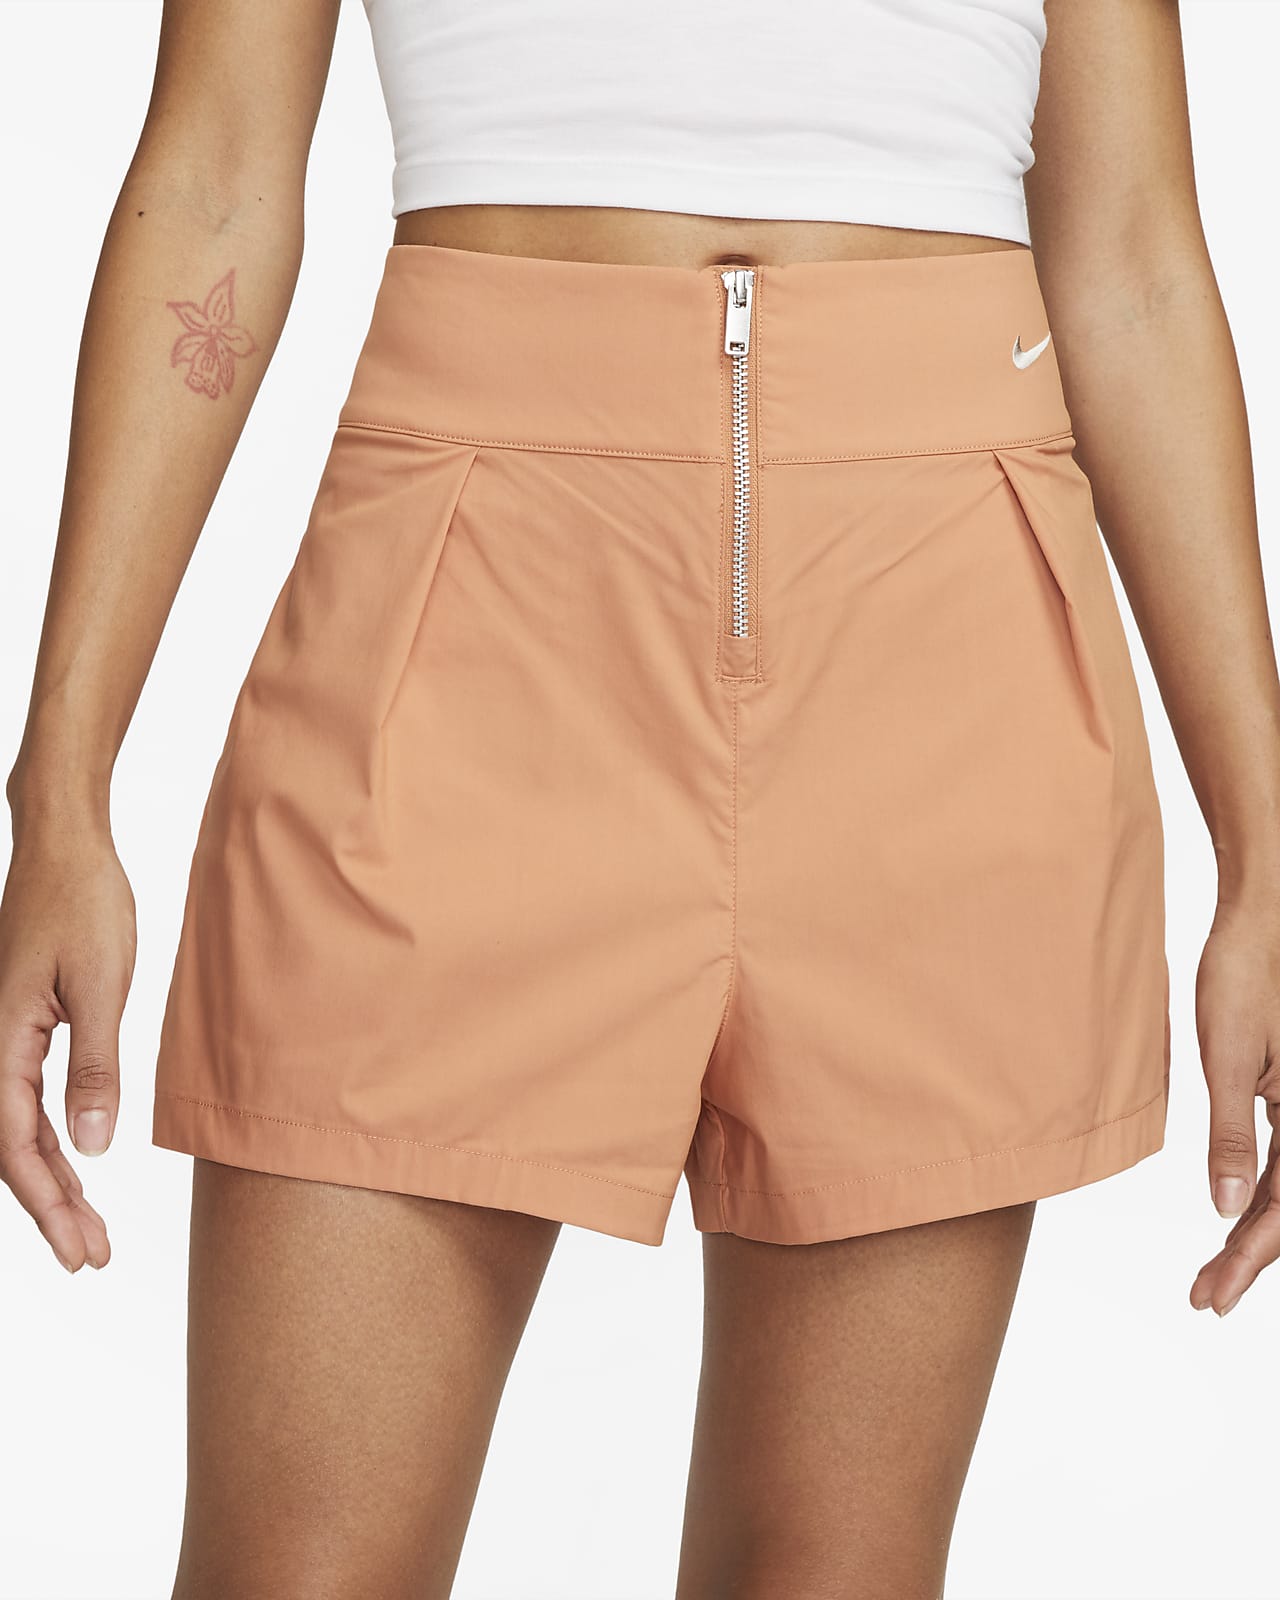 Collection Shorts. Trouser Sportswear Women\'s Nike